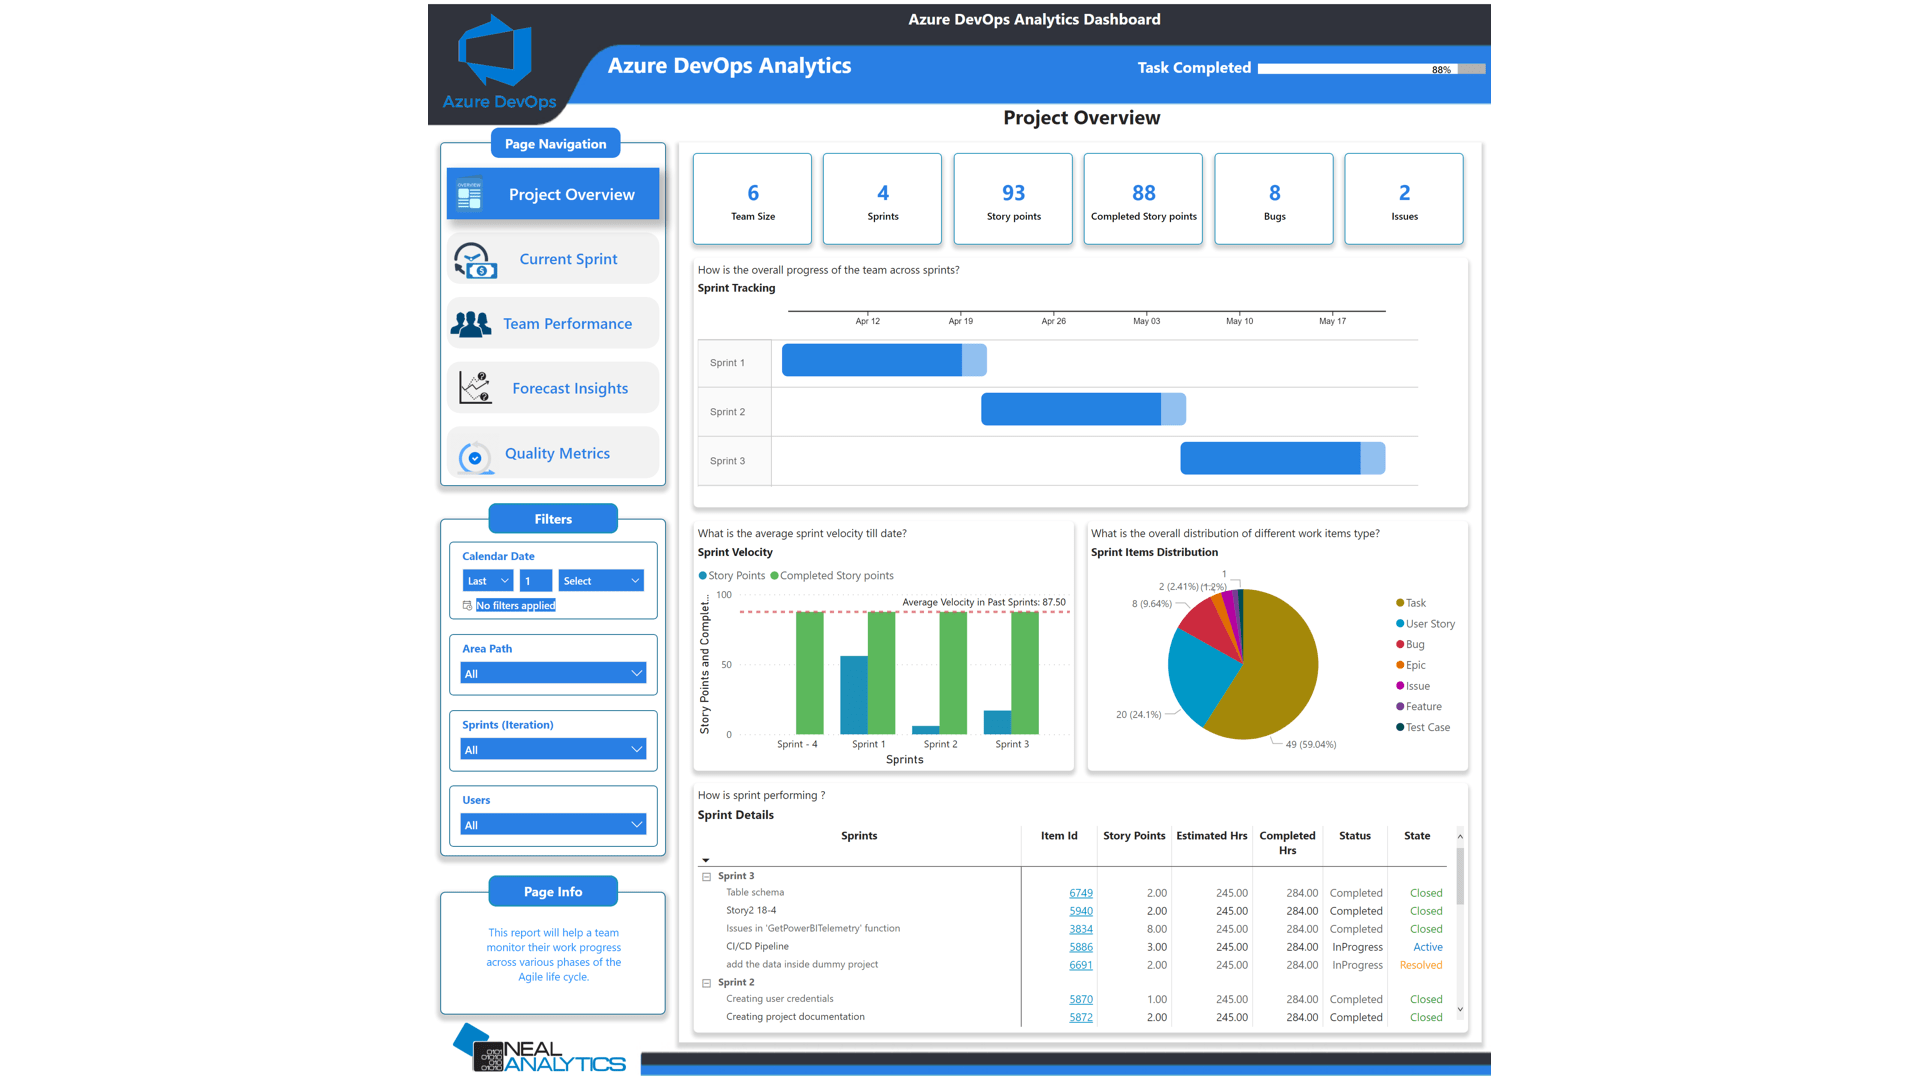 Azure DevOps Analytics Dashboard screenshot showing project overview